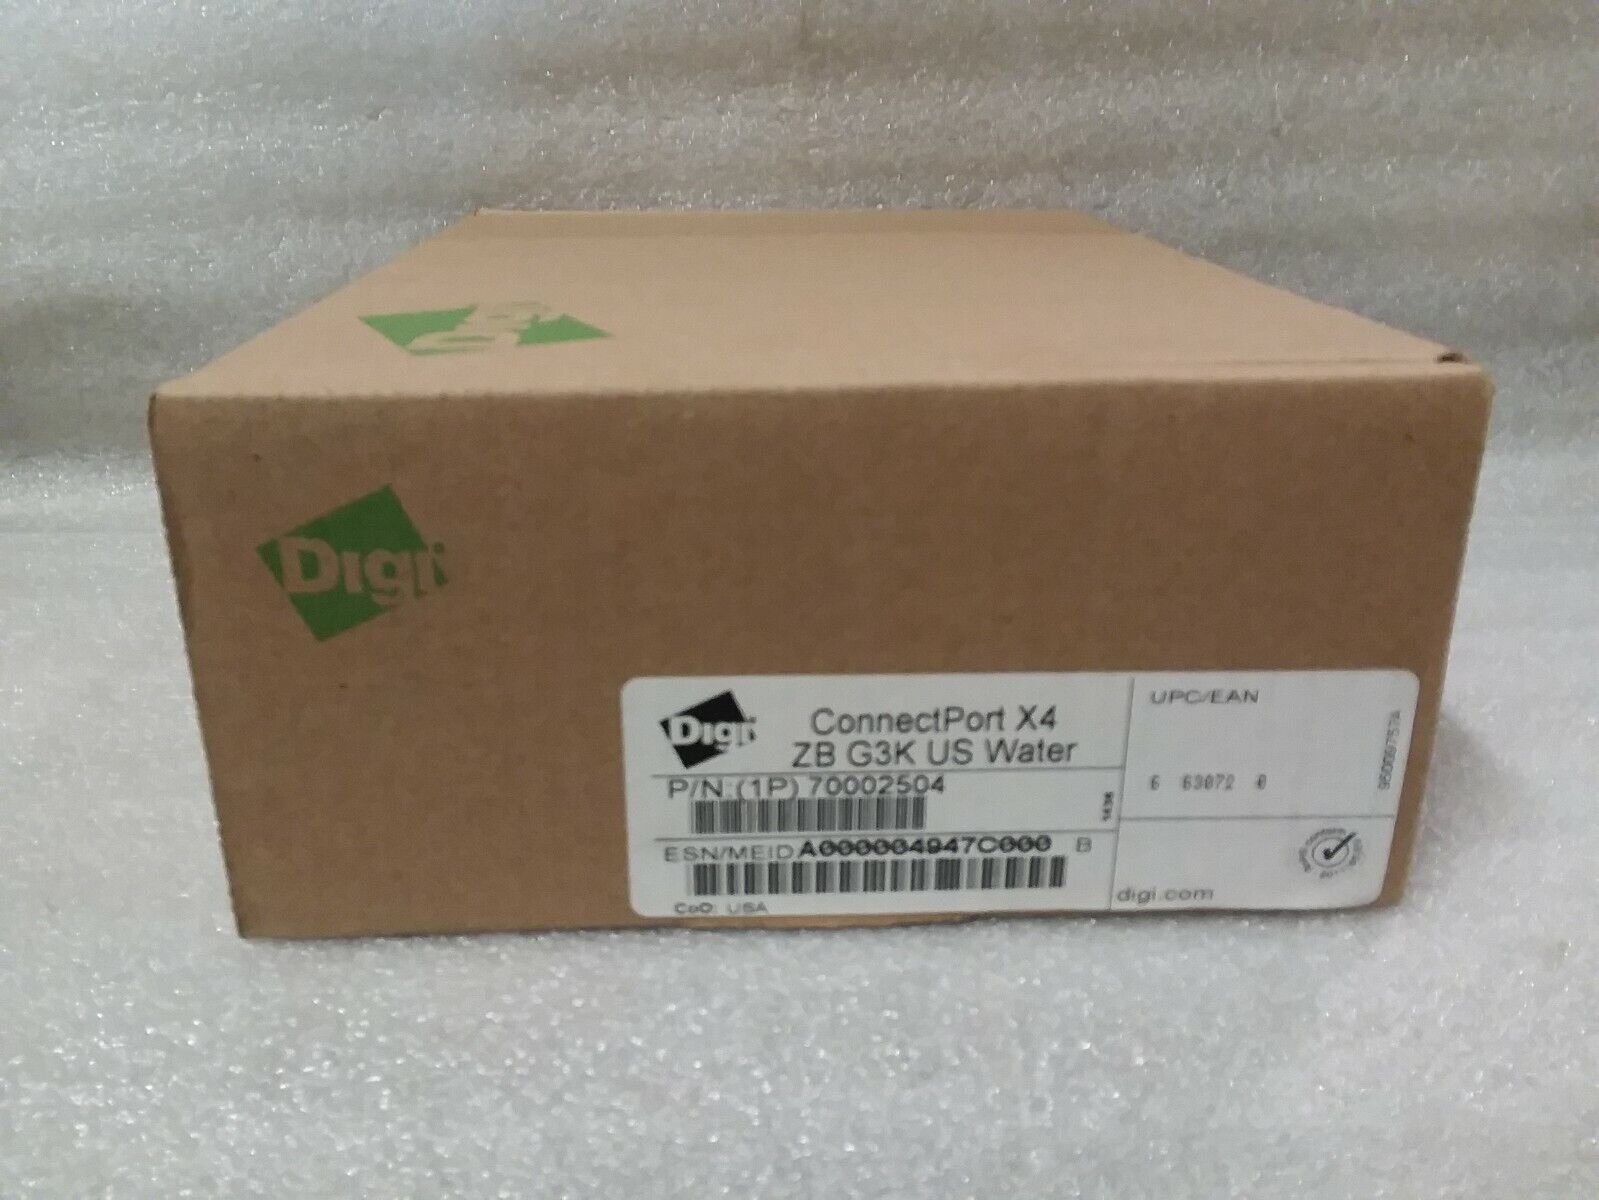 Digi ConnectPort X4  (1P) 70002504  ZB G3K  - Factory Sealed Box